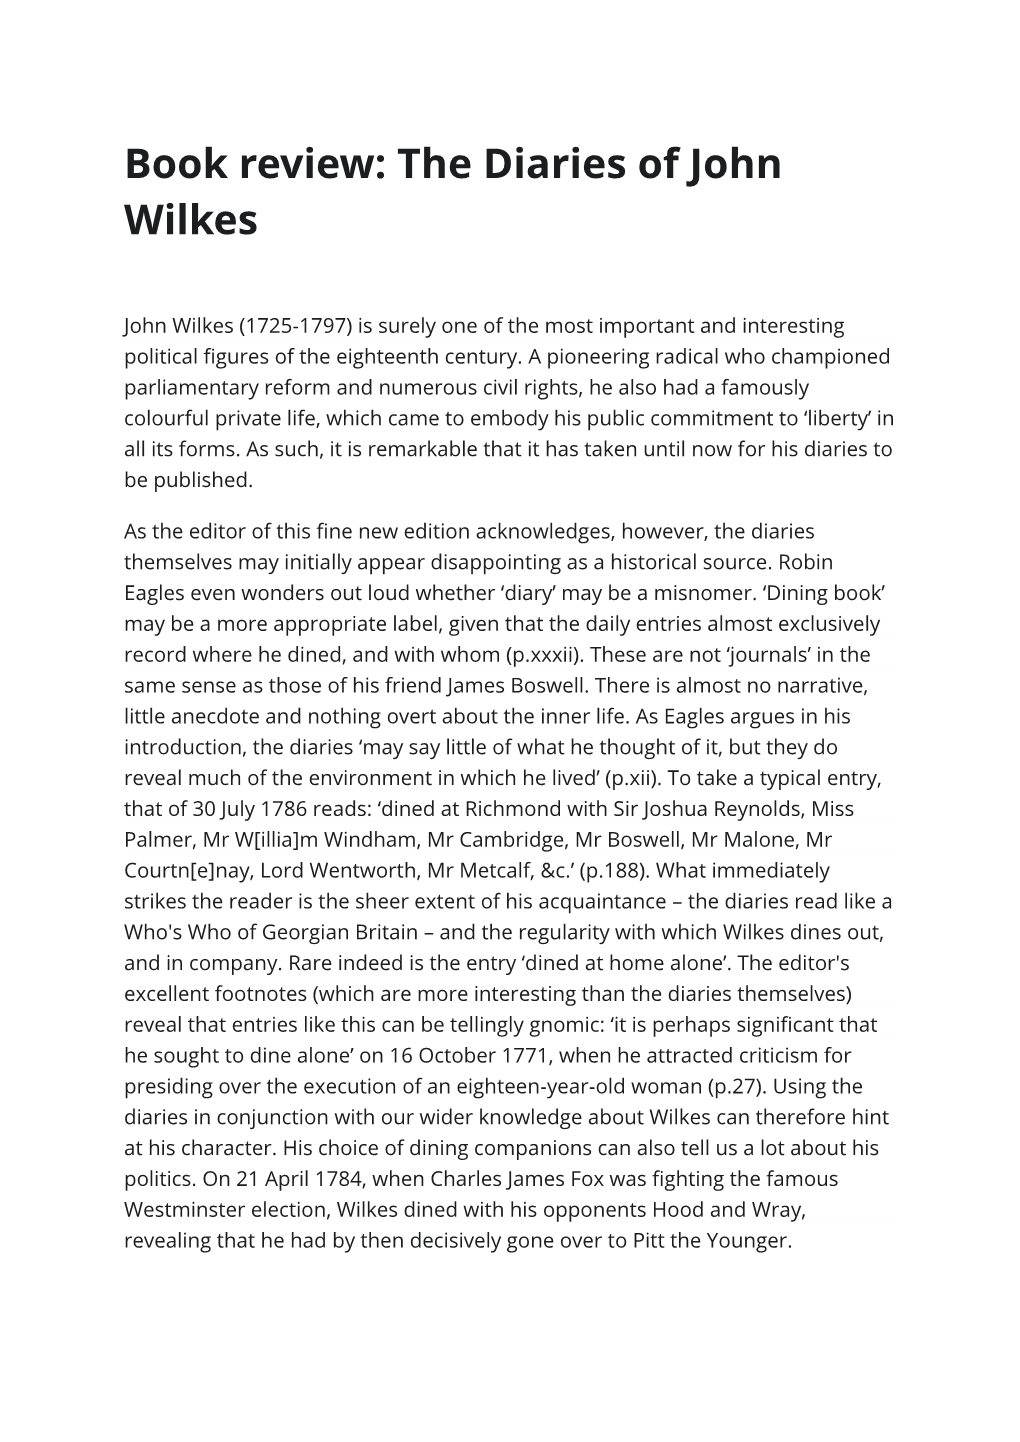 The Diaries of John Wilkes